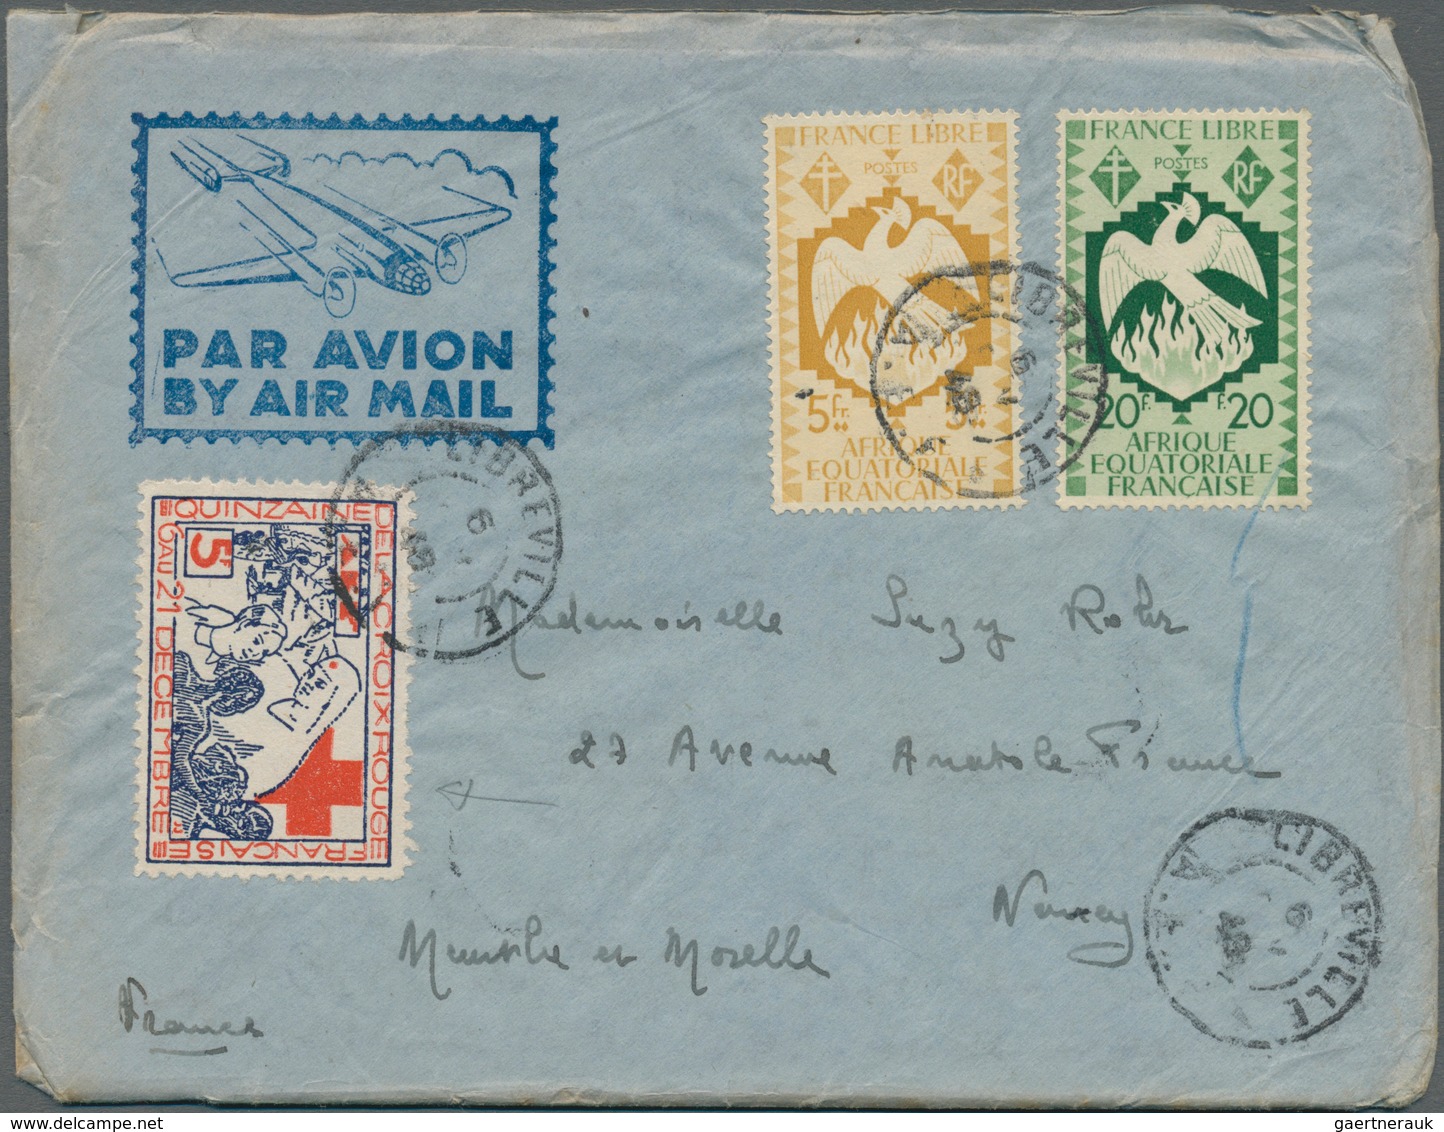 24762 Französische Kolonien / Nachfolgestaaten: 1871/1944: 87 better covers and postal stationeries includ